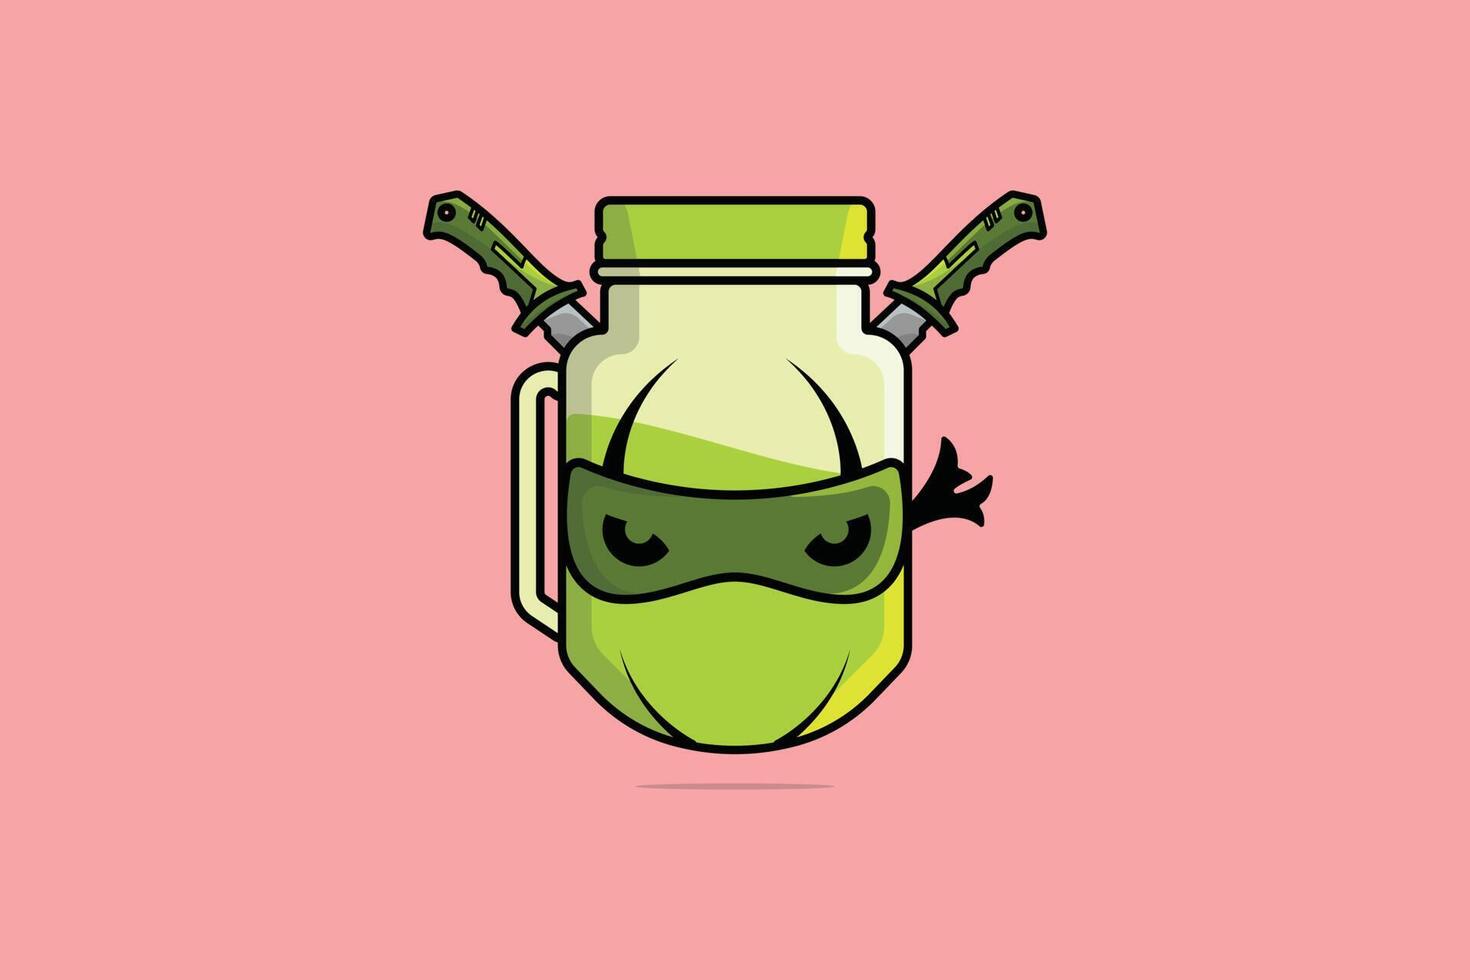 Ninja Mascot with Lemon Jar Mug with Metal Swords vector illustration. Food and drink object icon concept. Summer fresh lemon juice icon logo. Creative ninja lemon juice logo icon.